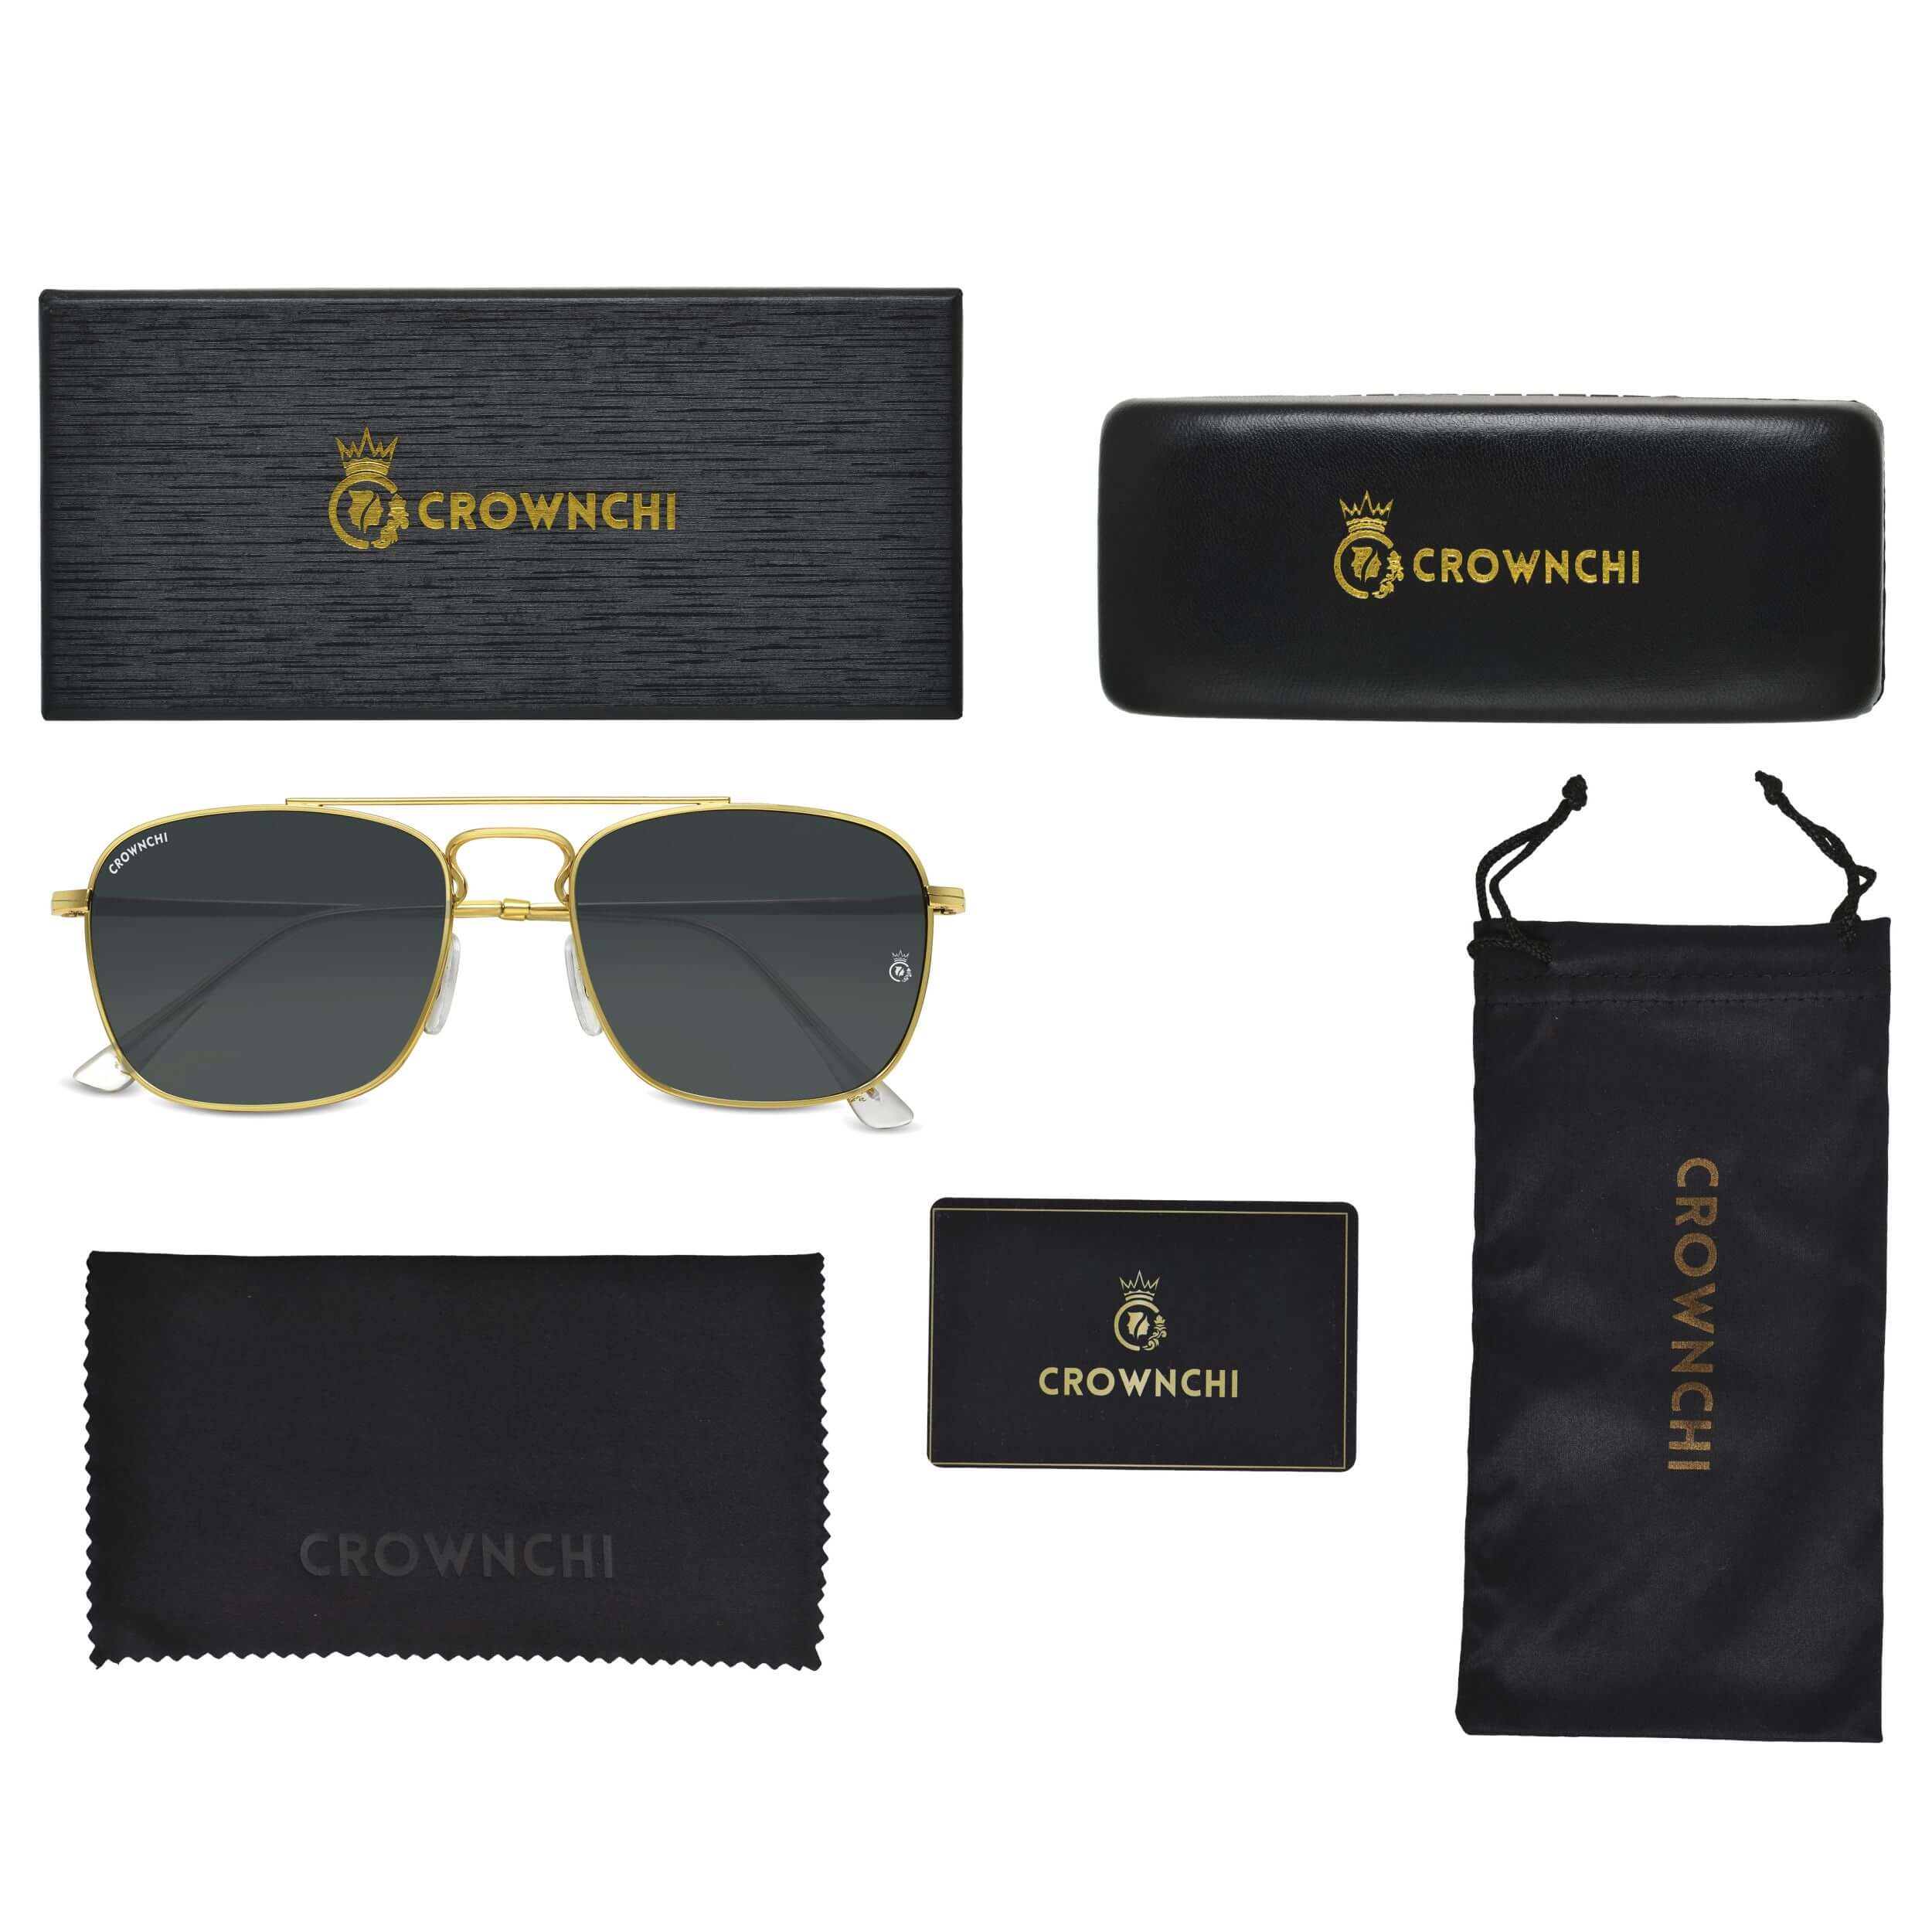 Denver Gold Black Square Edition Sunglasses